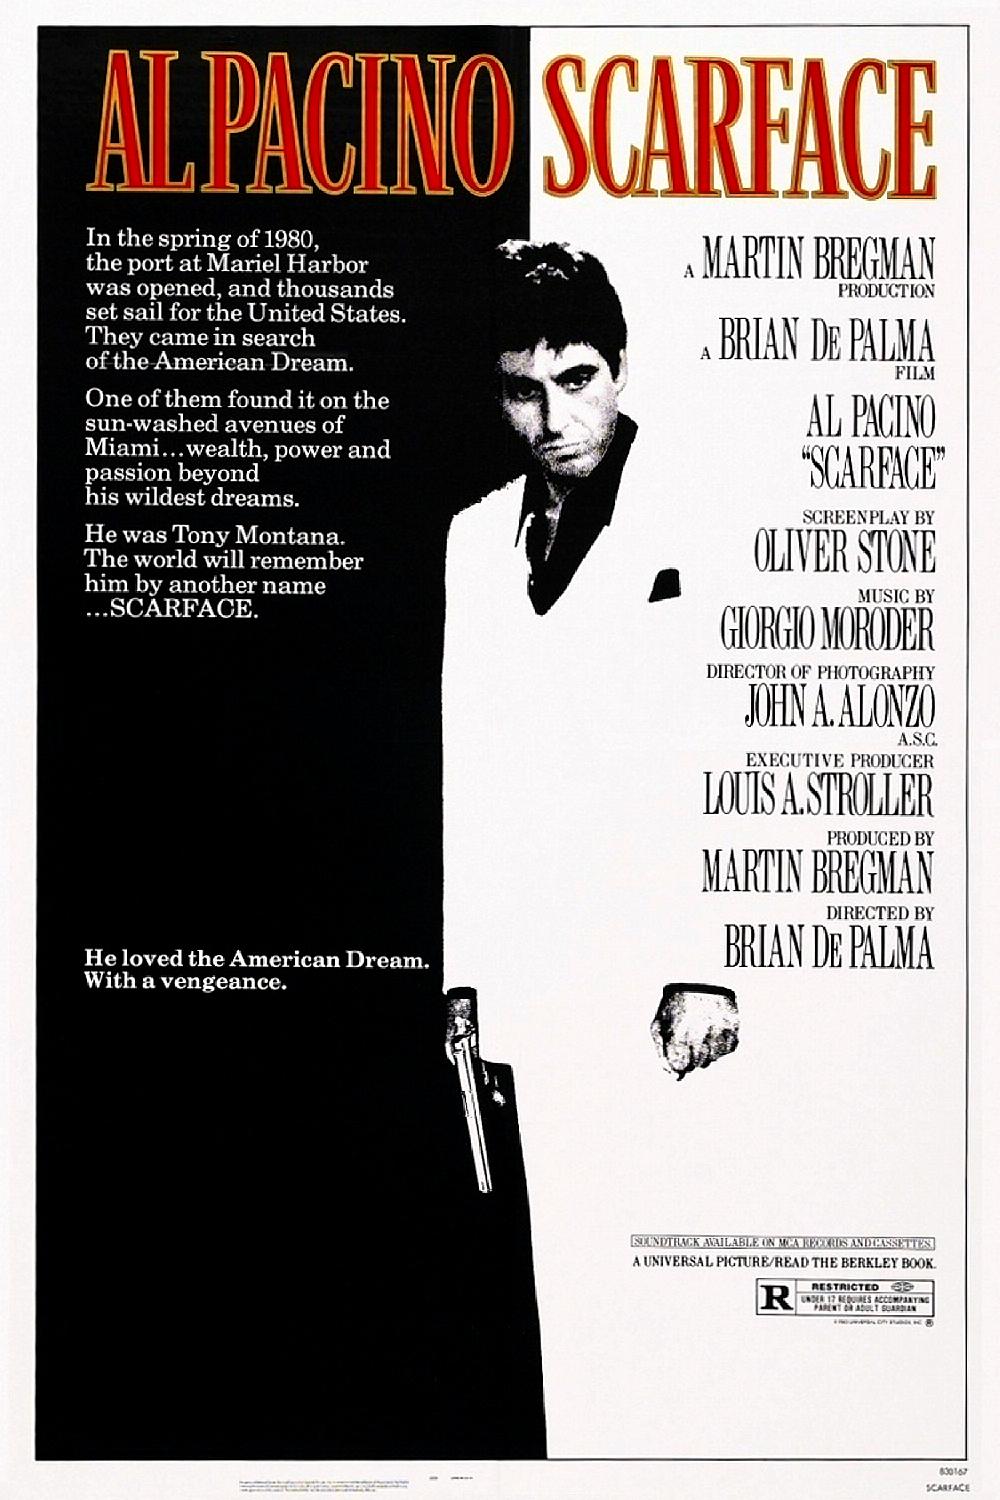 FULL MOVIE: Scarface (1983)